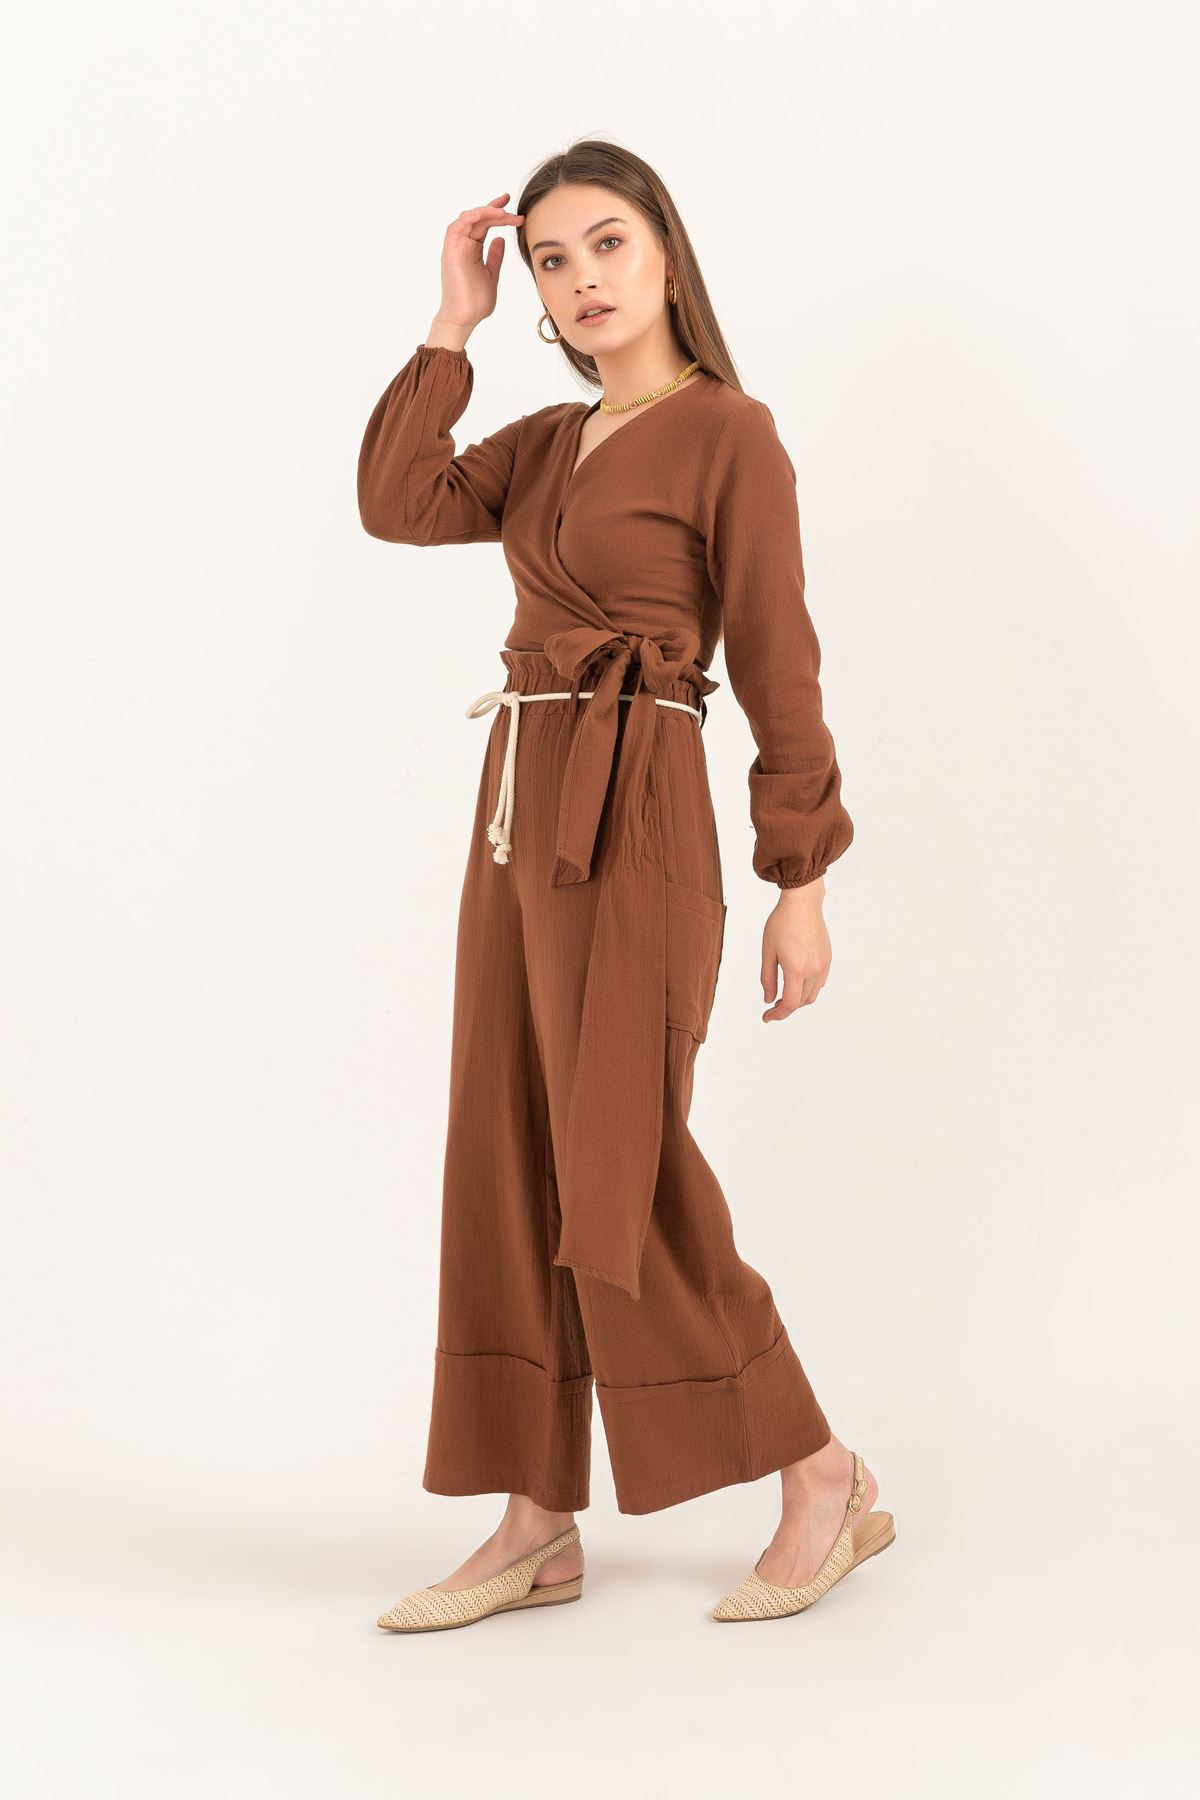 Muslin Fabric Short Comfy Women Shorts - brown